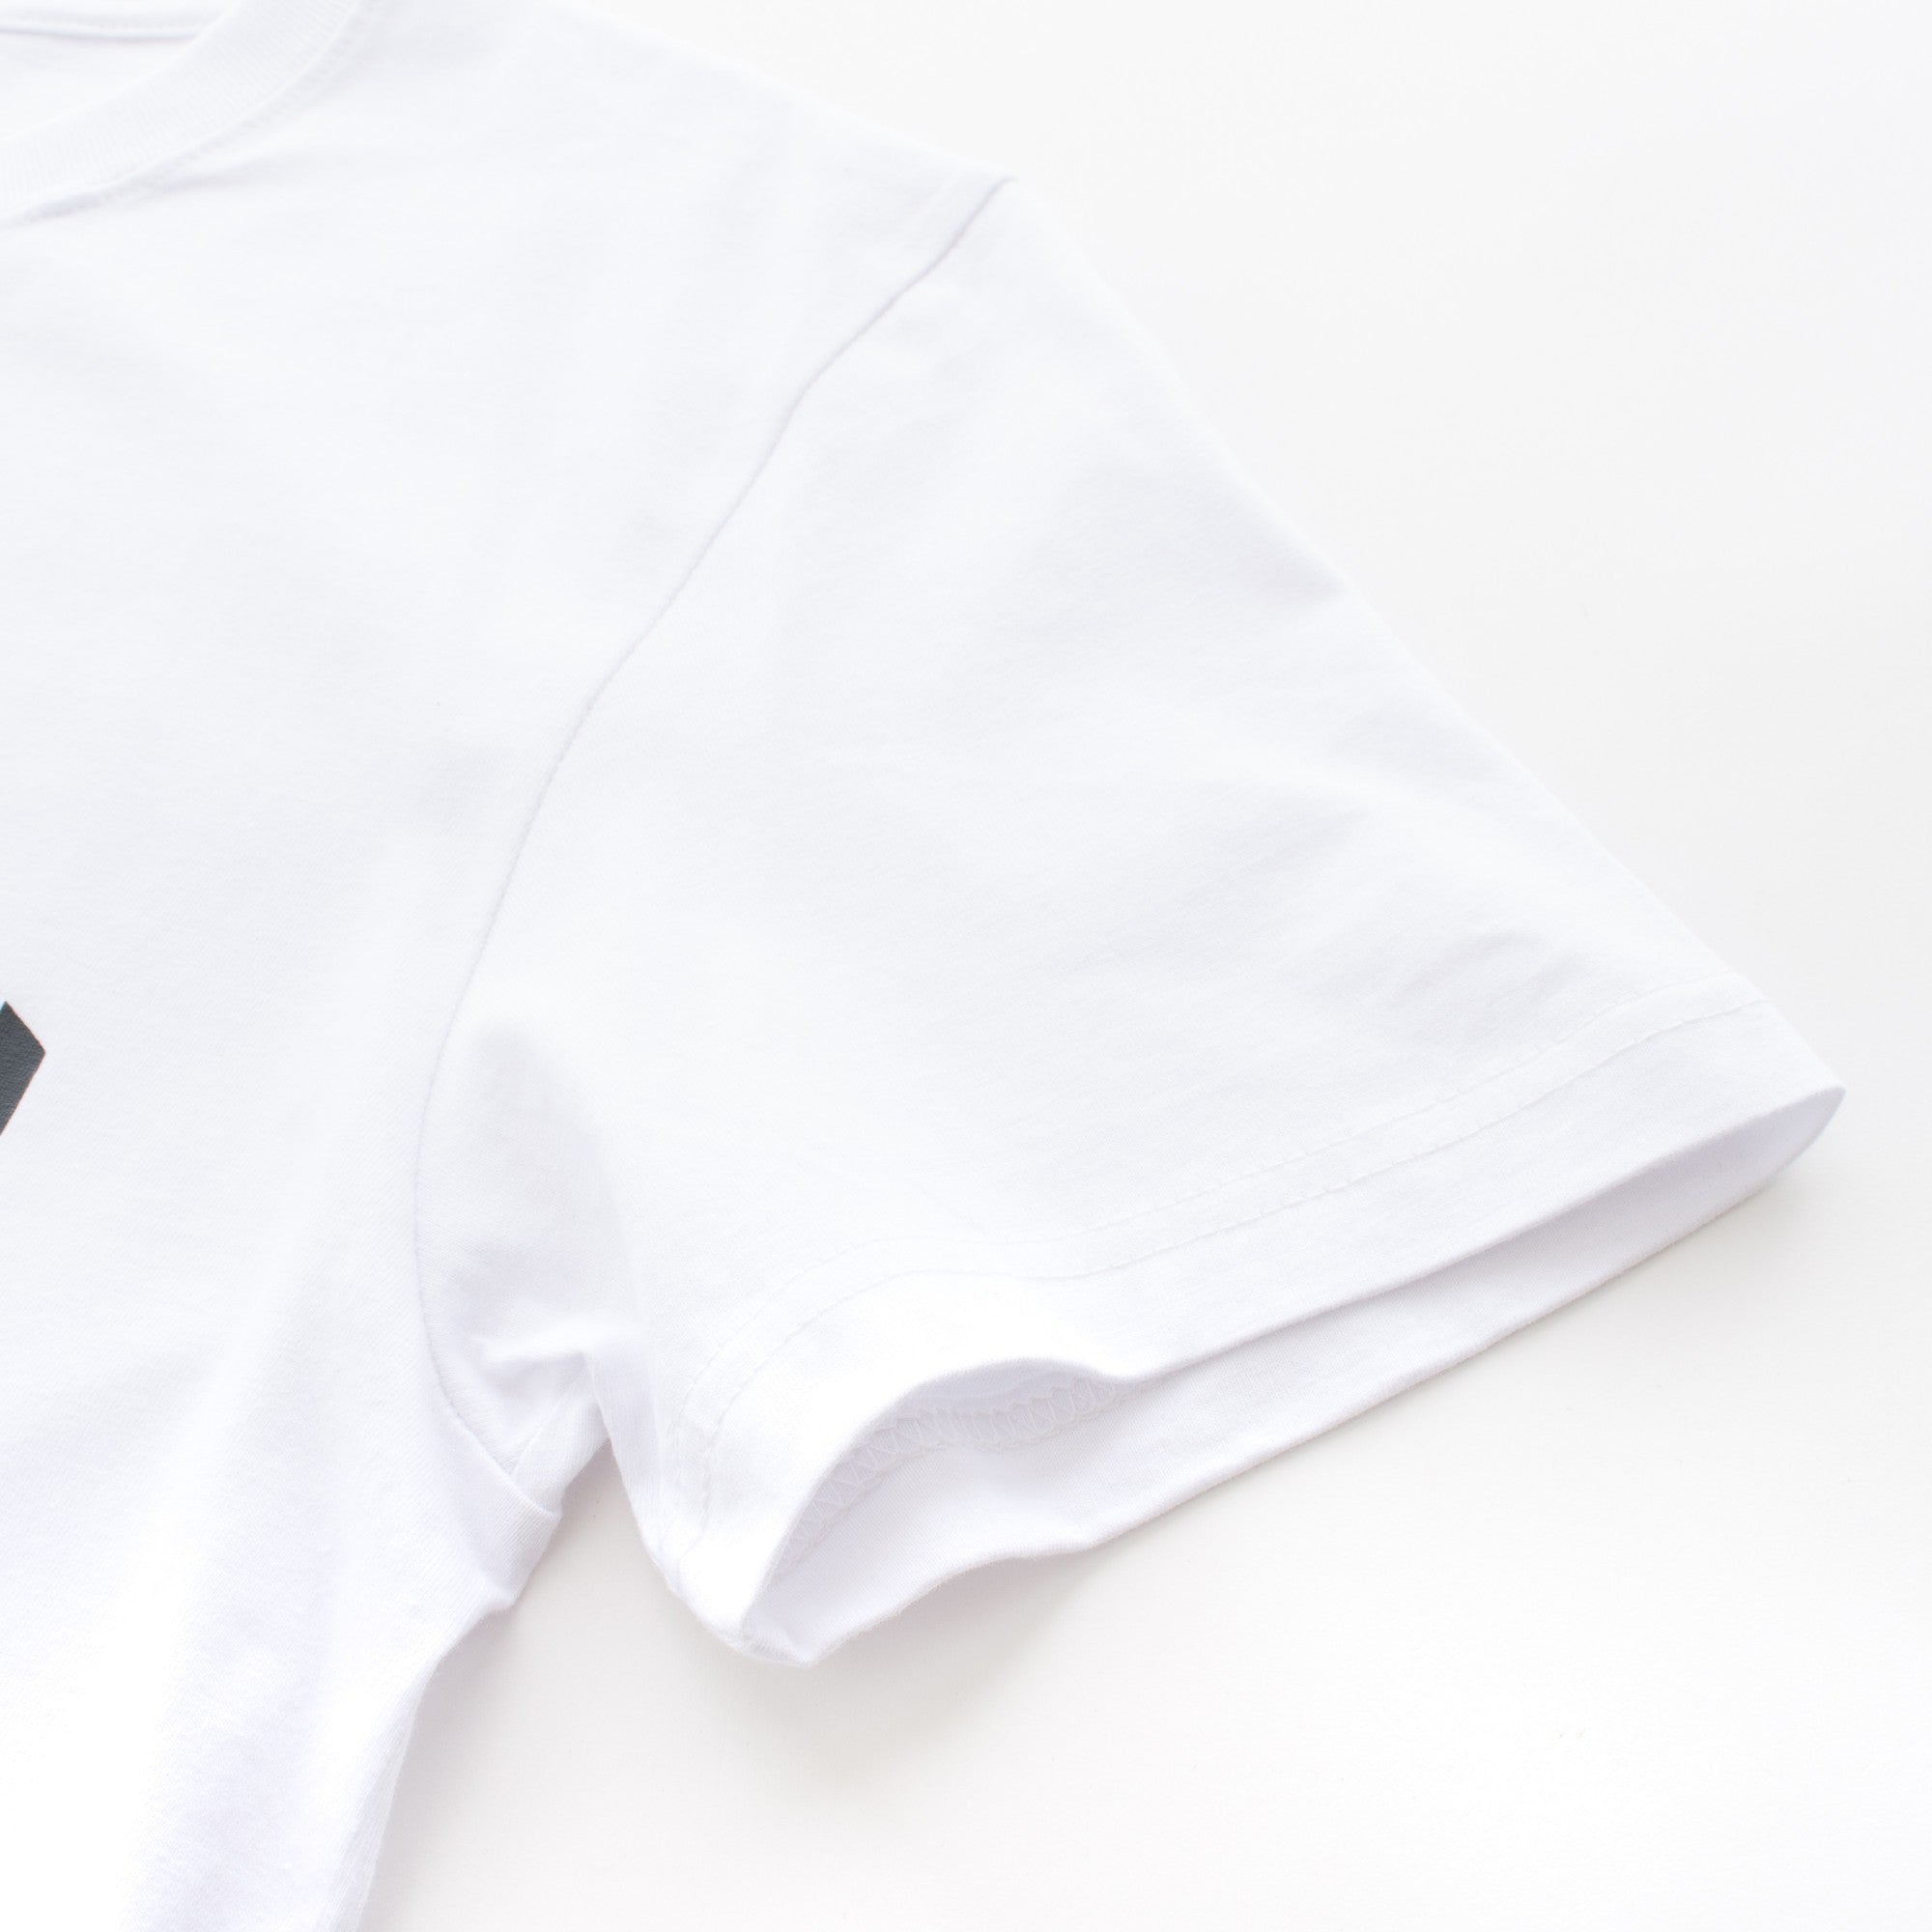 HILLTON RICH(ヒルトンリッチ）メンズ カットソー アーチ LOGO Tシャツ　white×purple